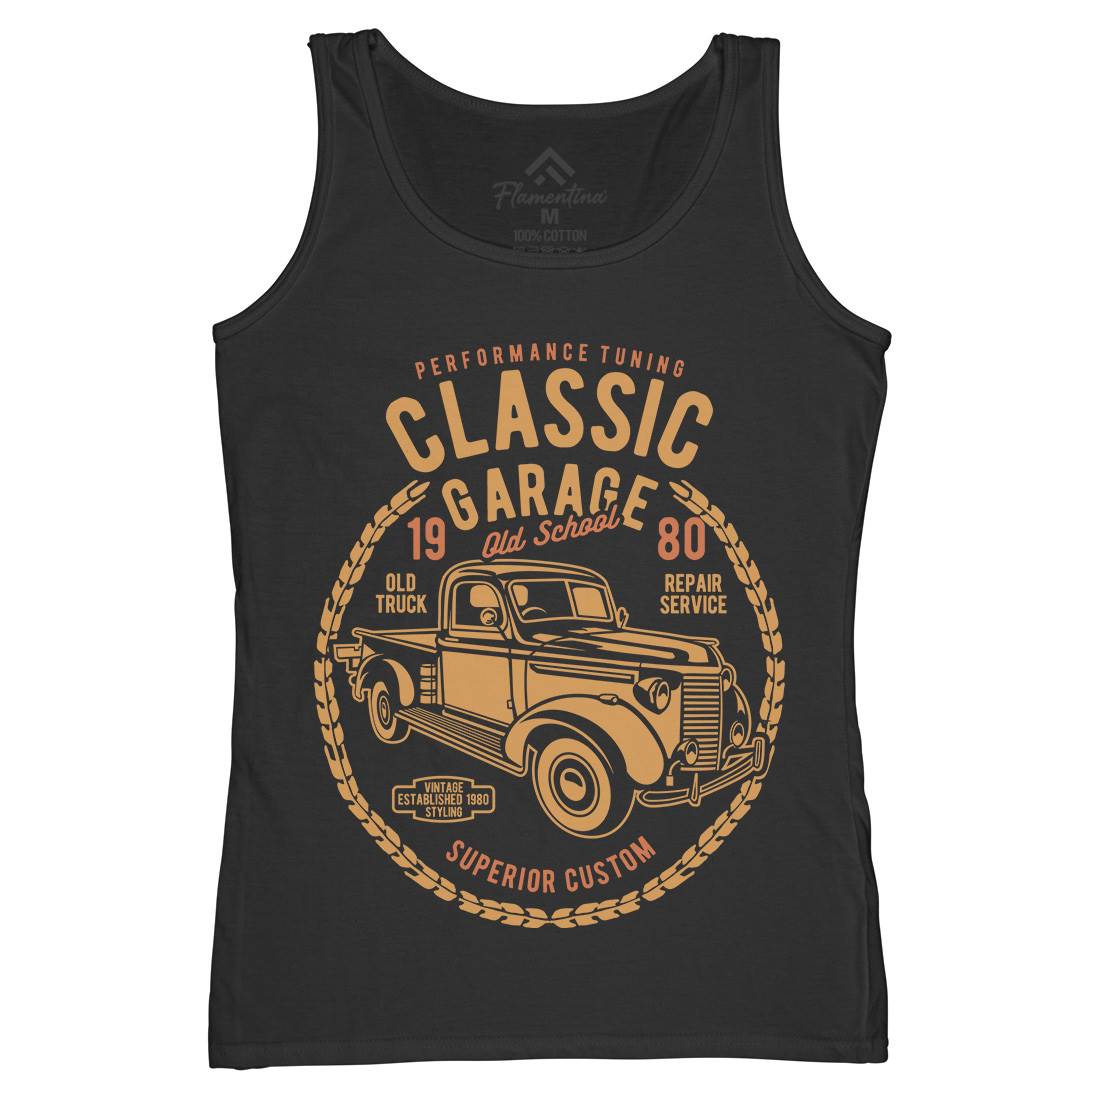 Classic Garage Womens Organic Tank Top Vest Cars B194